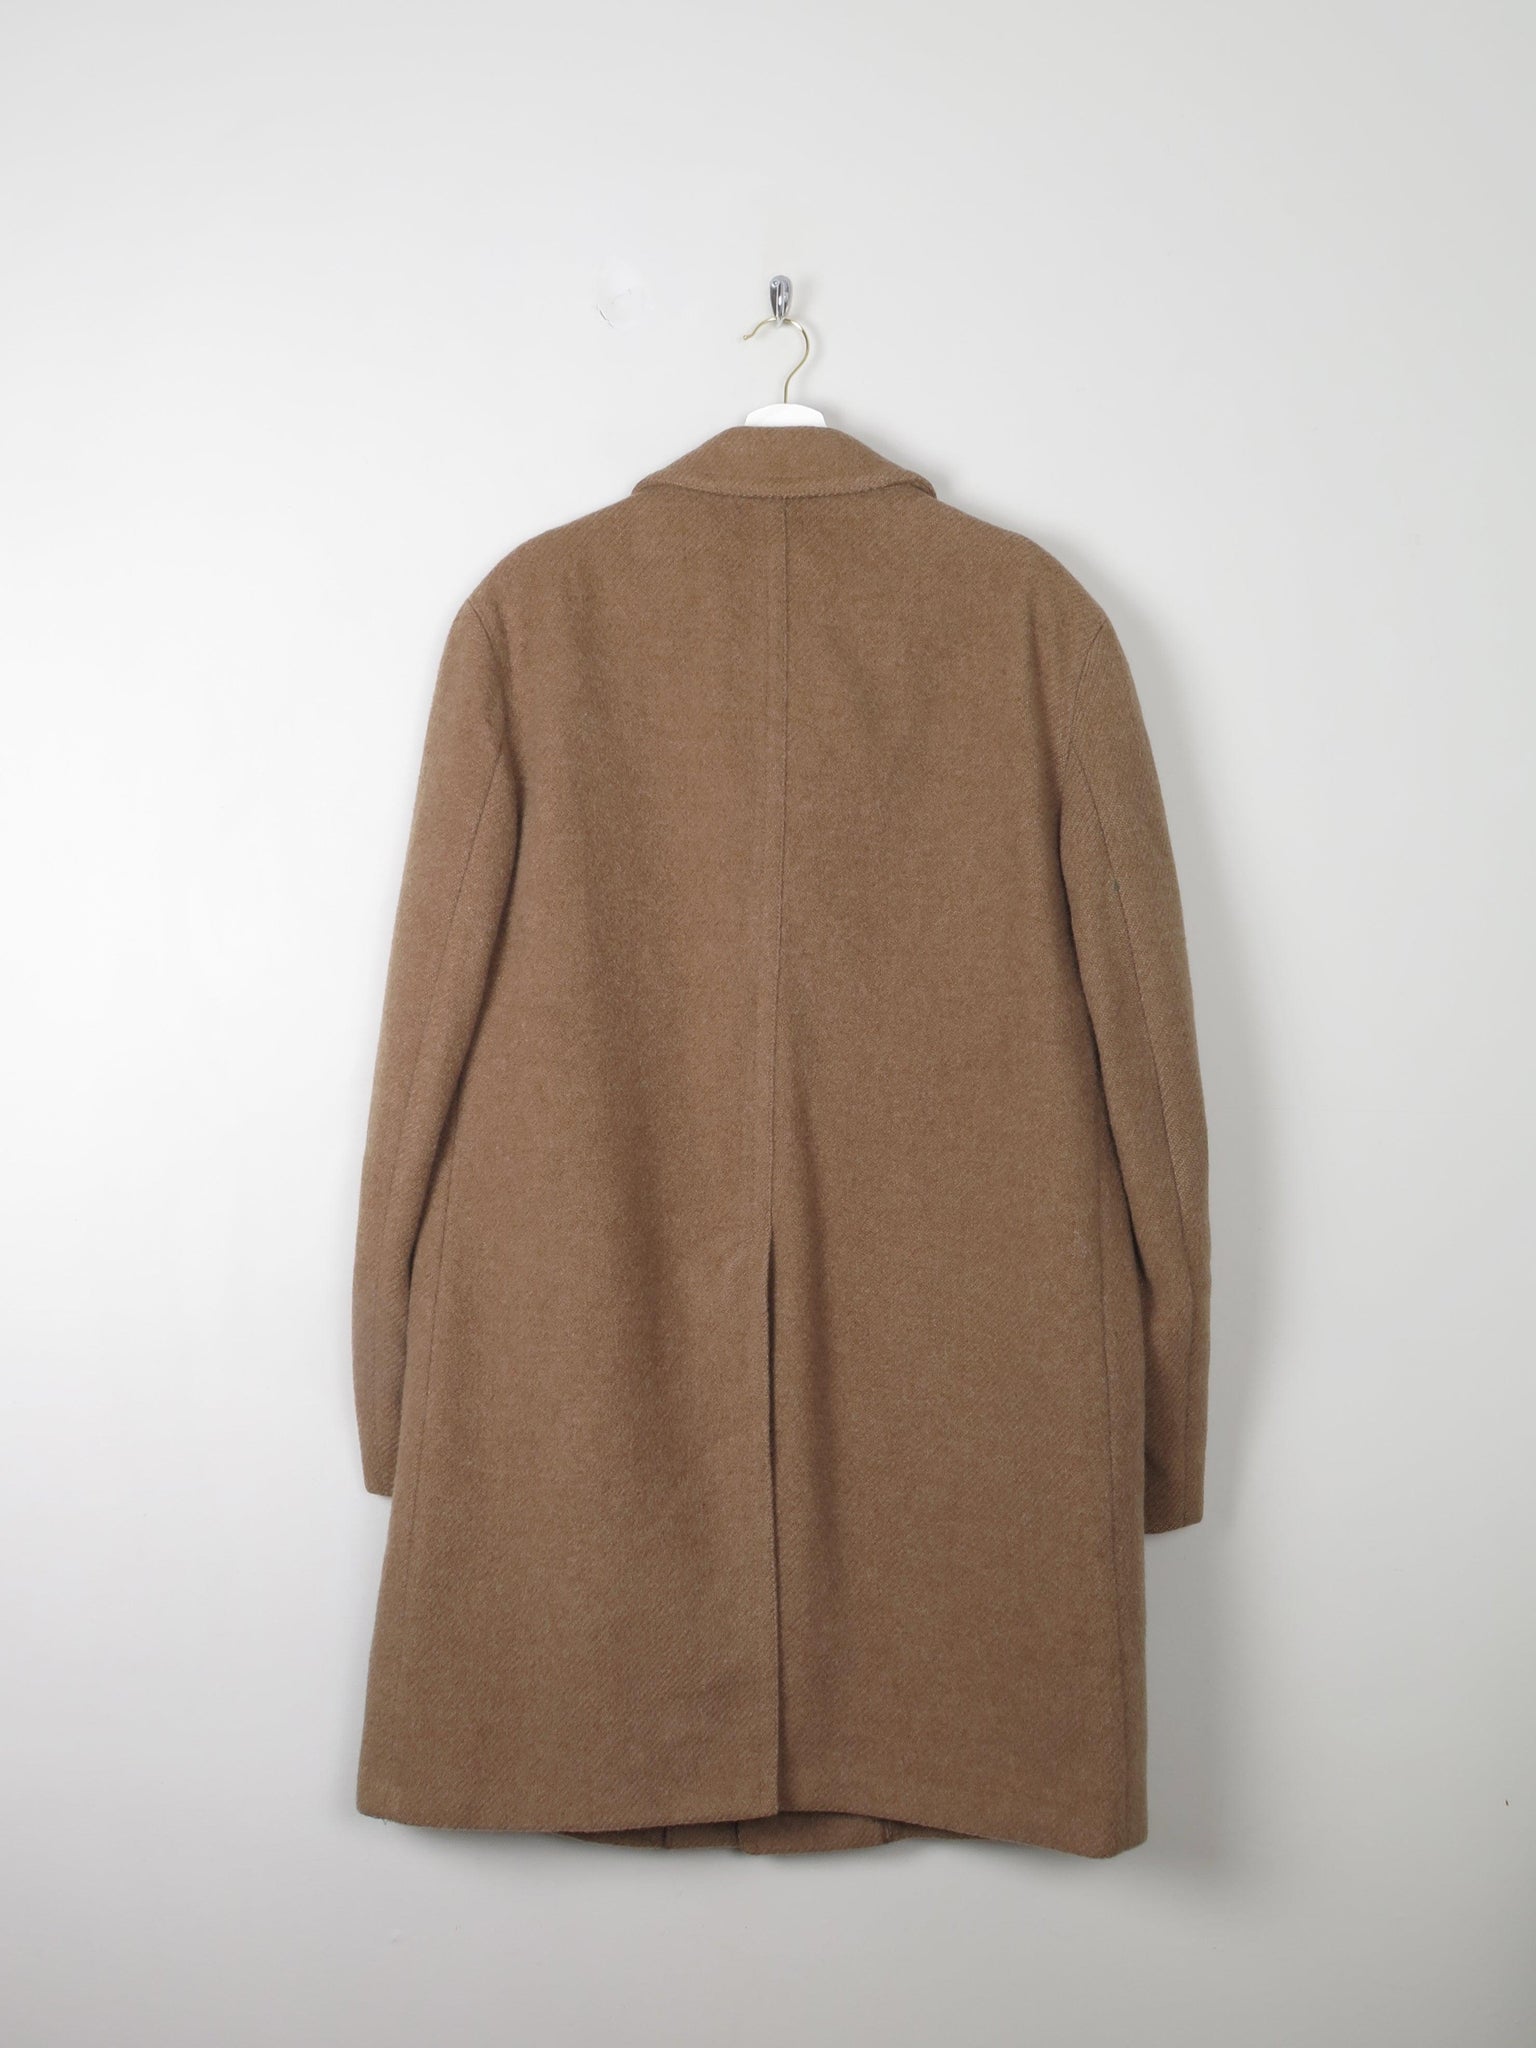 Men's Vintage Coat Wool Dark Camel/Tan L 44" - The Harlequin